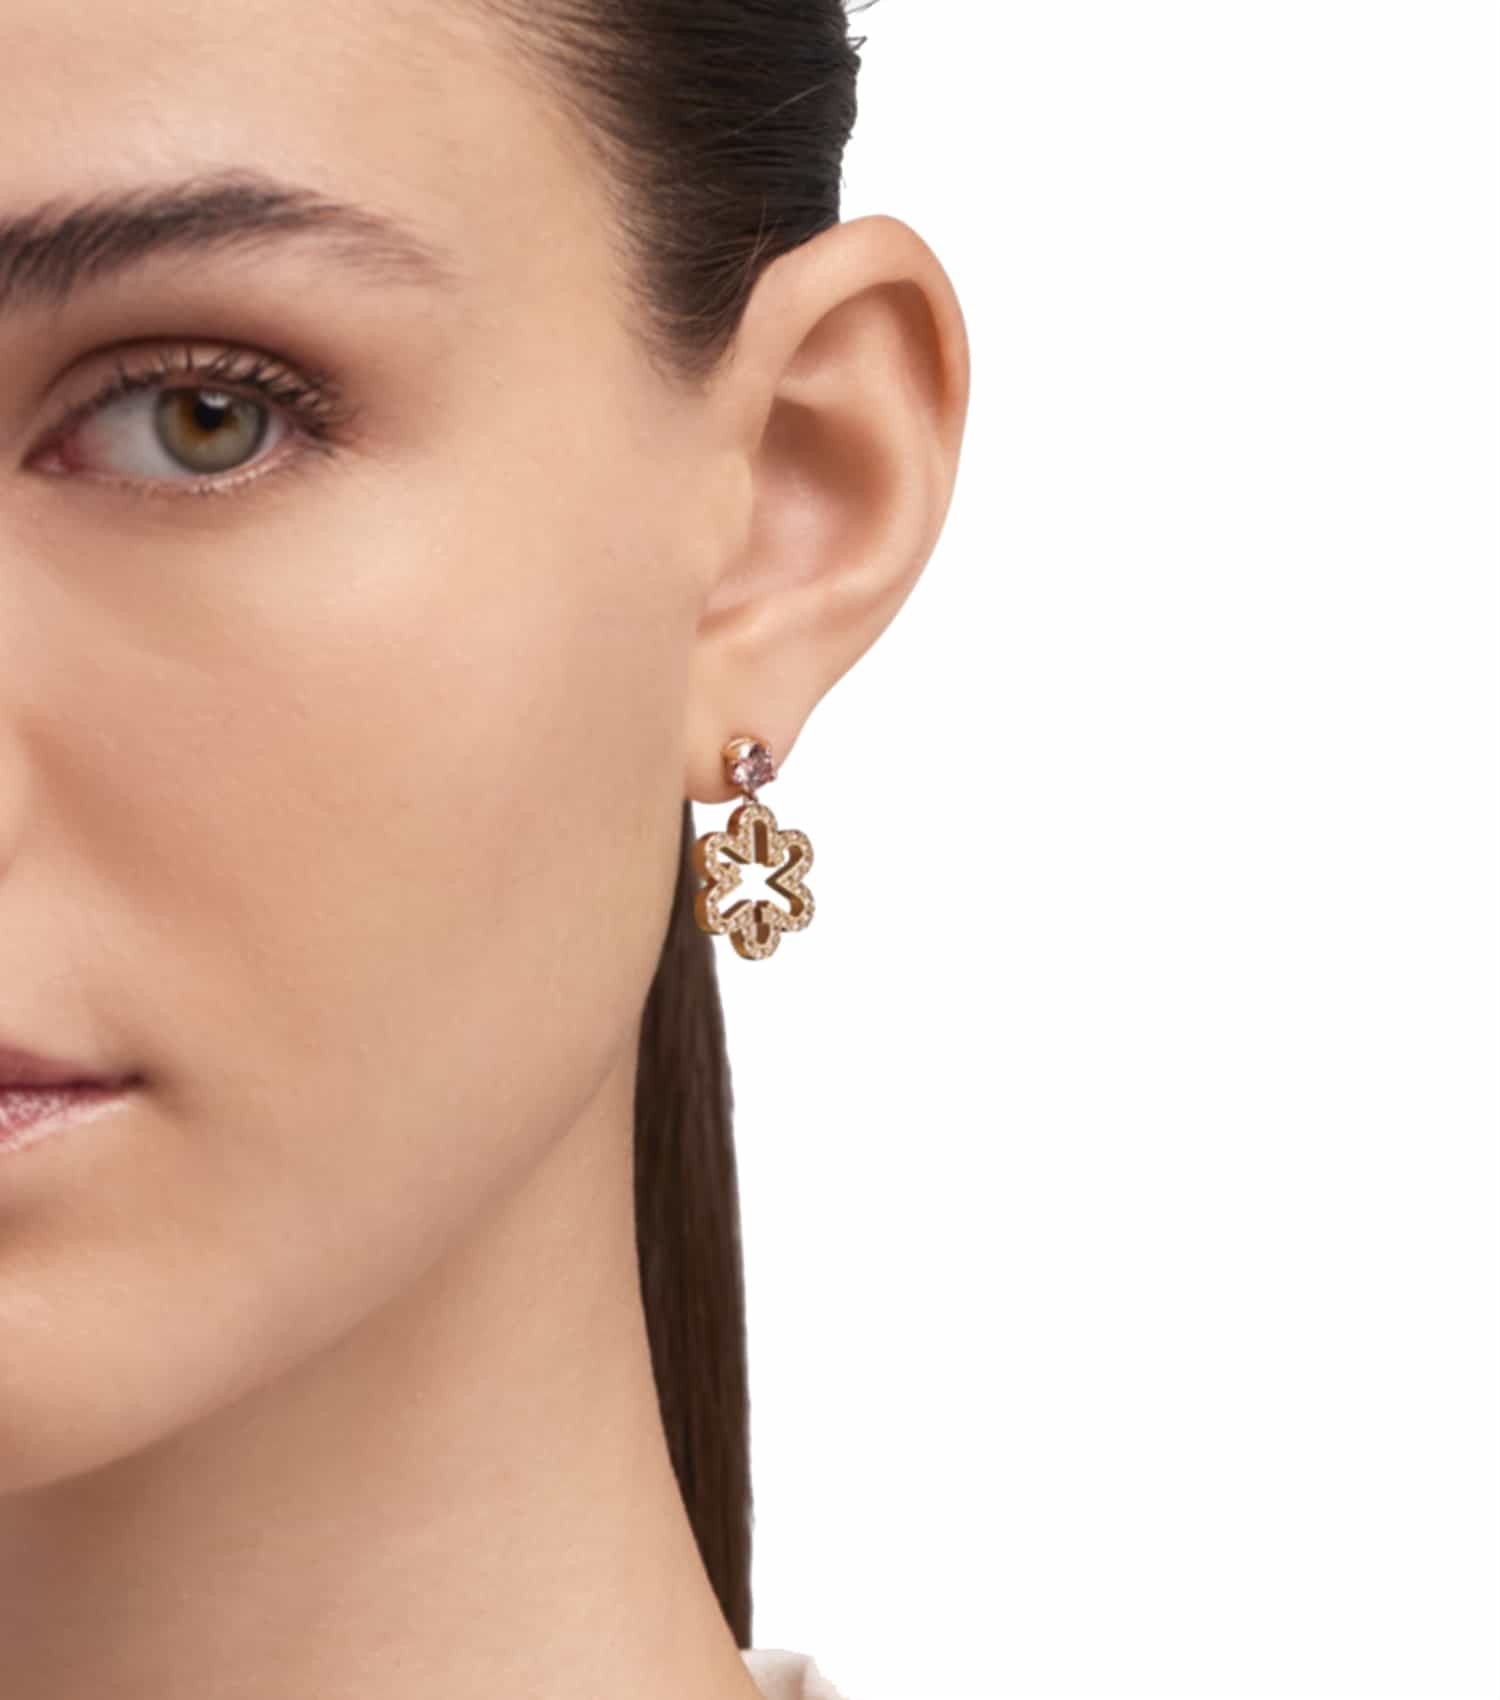 Women Fleur Earrings Gold Stainless steel & crystals